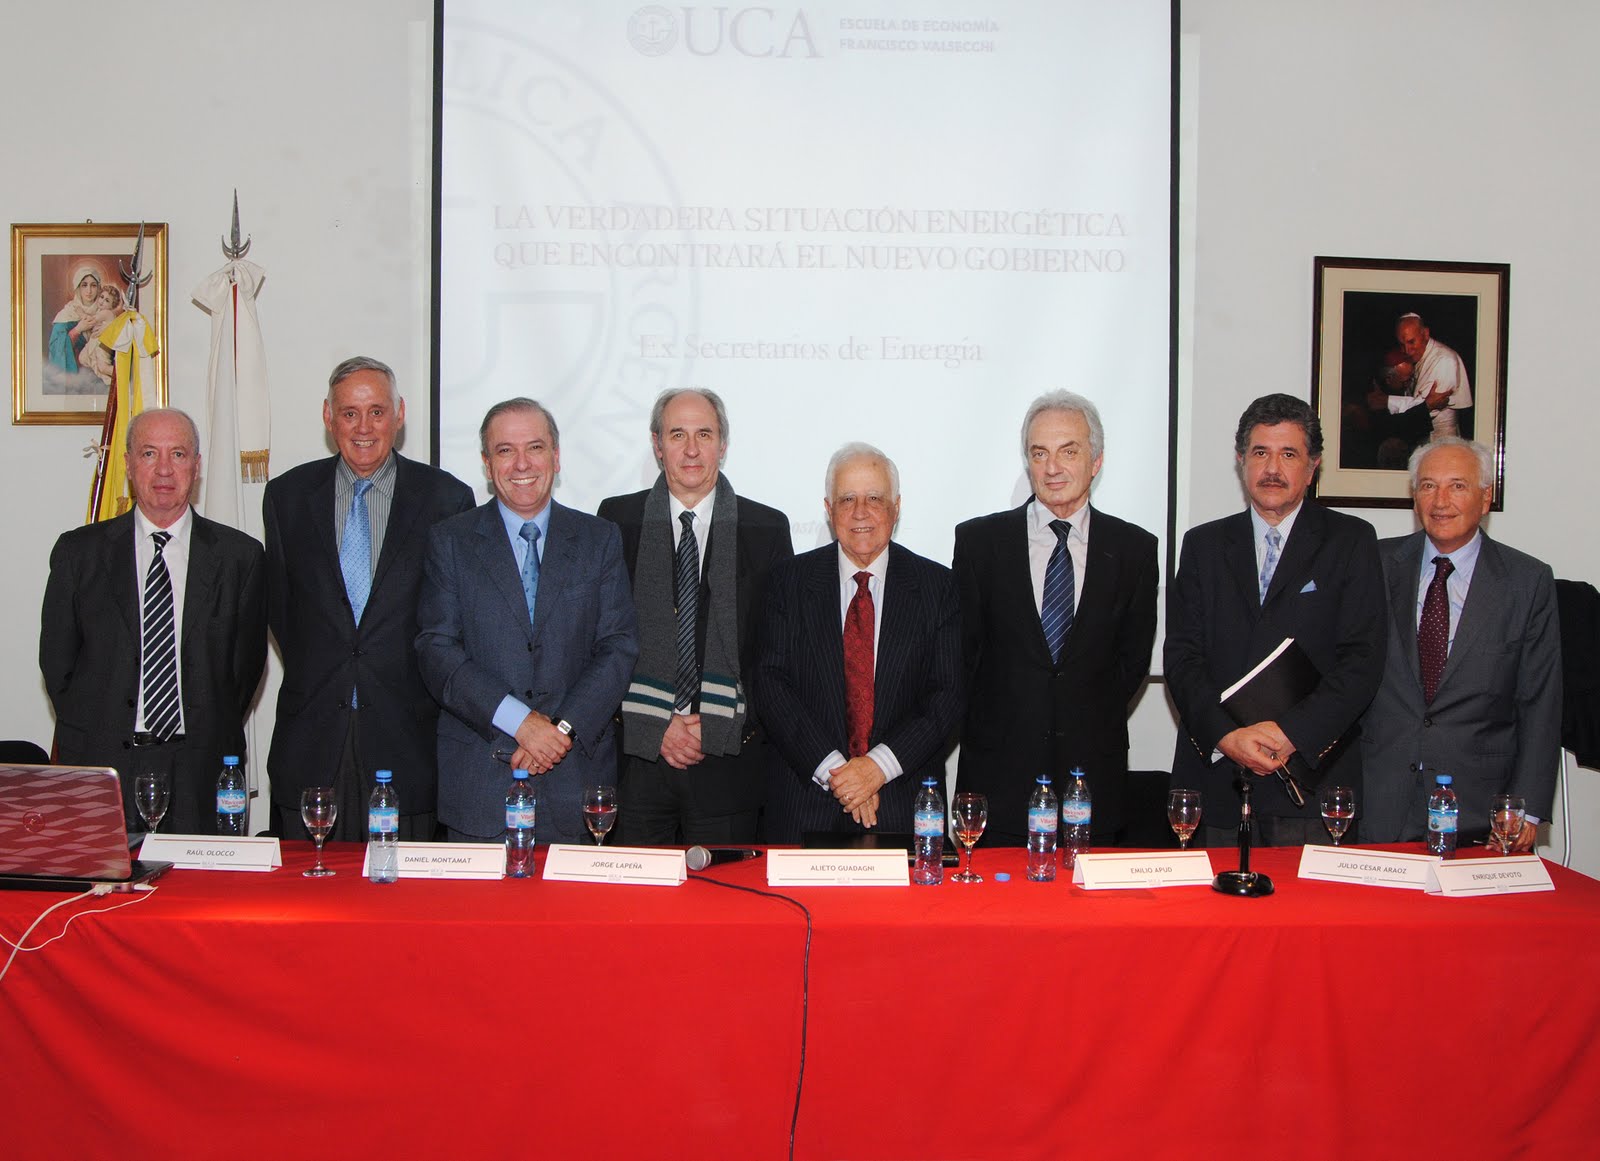 Raúl Olocco, Daniel Montamat, Jorge Lapeña, Alieto Guadagni, Emilio Apud, Julio César Araoz, Enrique Devoto son los actuales miembros del grupo. (Foto: gentileza)